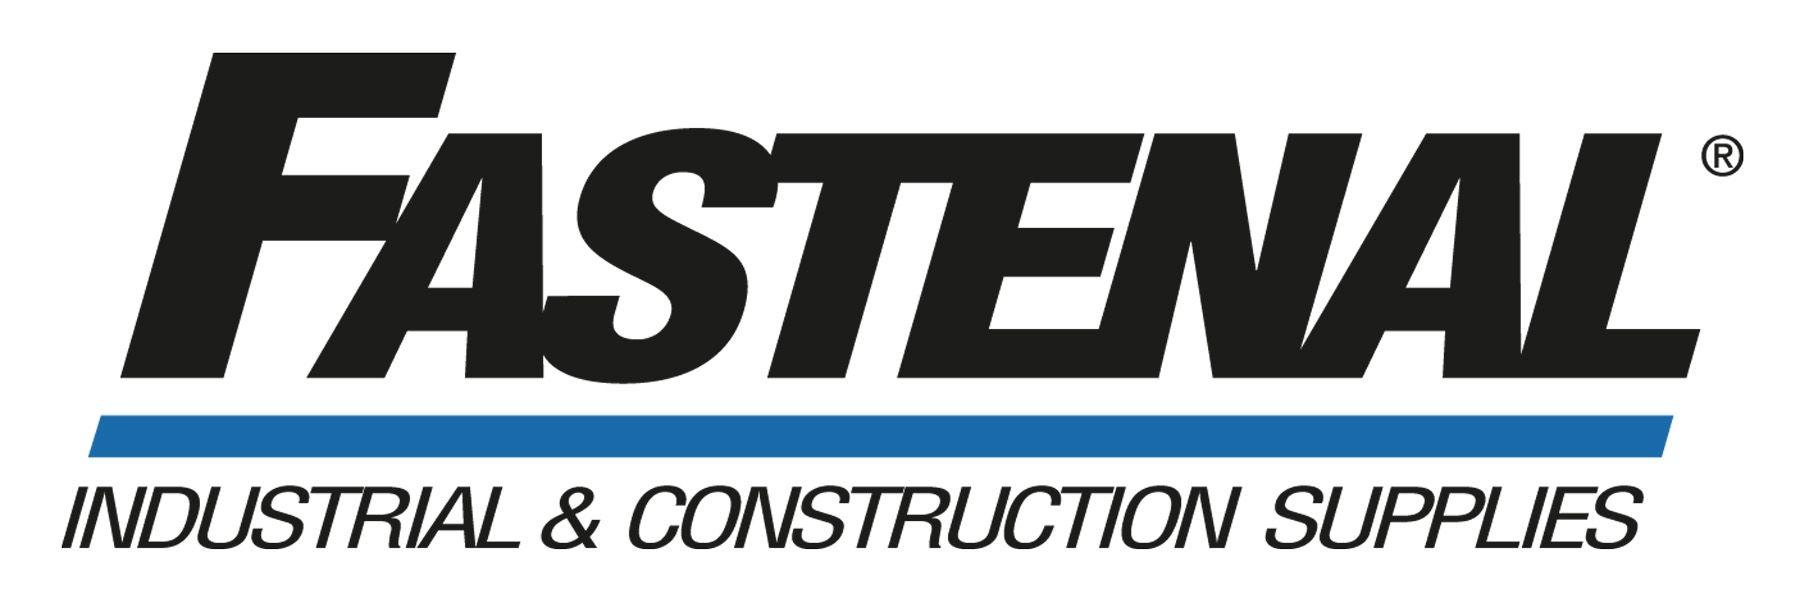 Fastenal Logo - Fastenal Company « Logos & Brands Directory